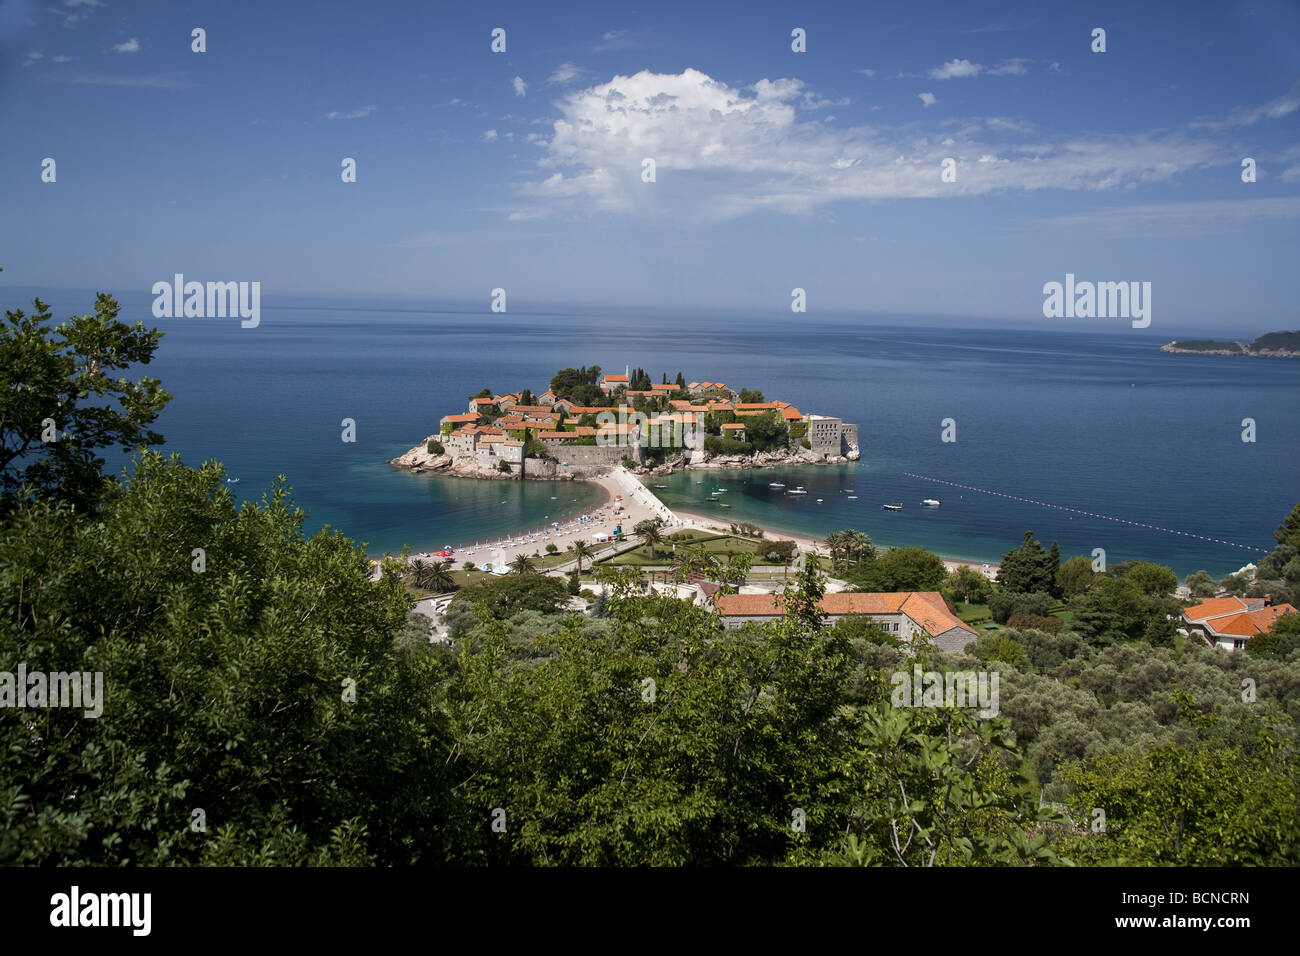 Hotel peninsula Sveti Stefan, Montenegro, Adriatic Sea, coast resort Stock Photo